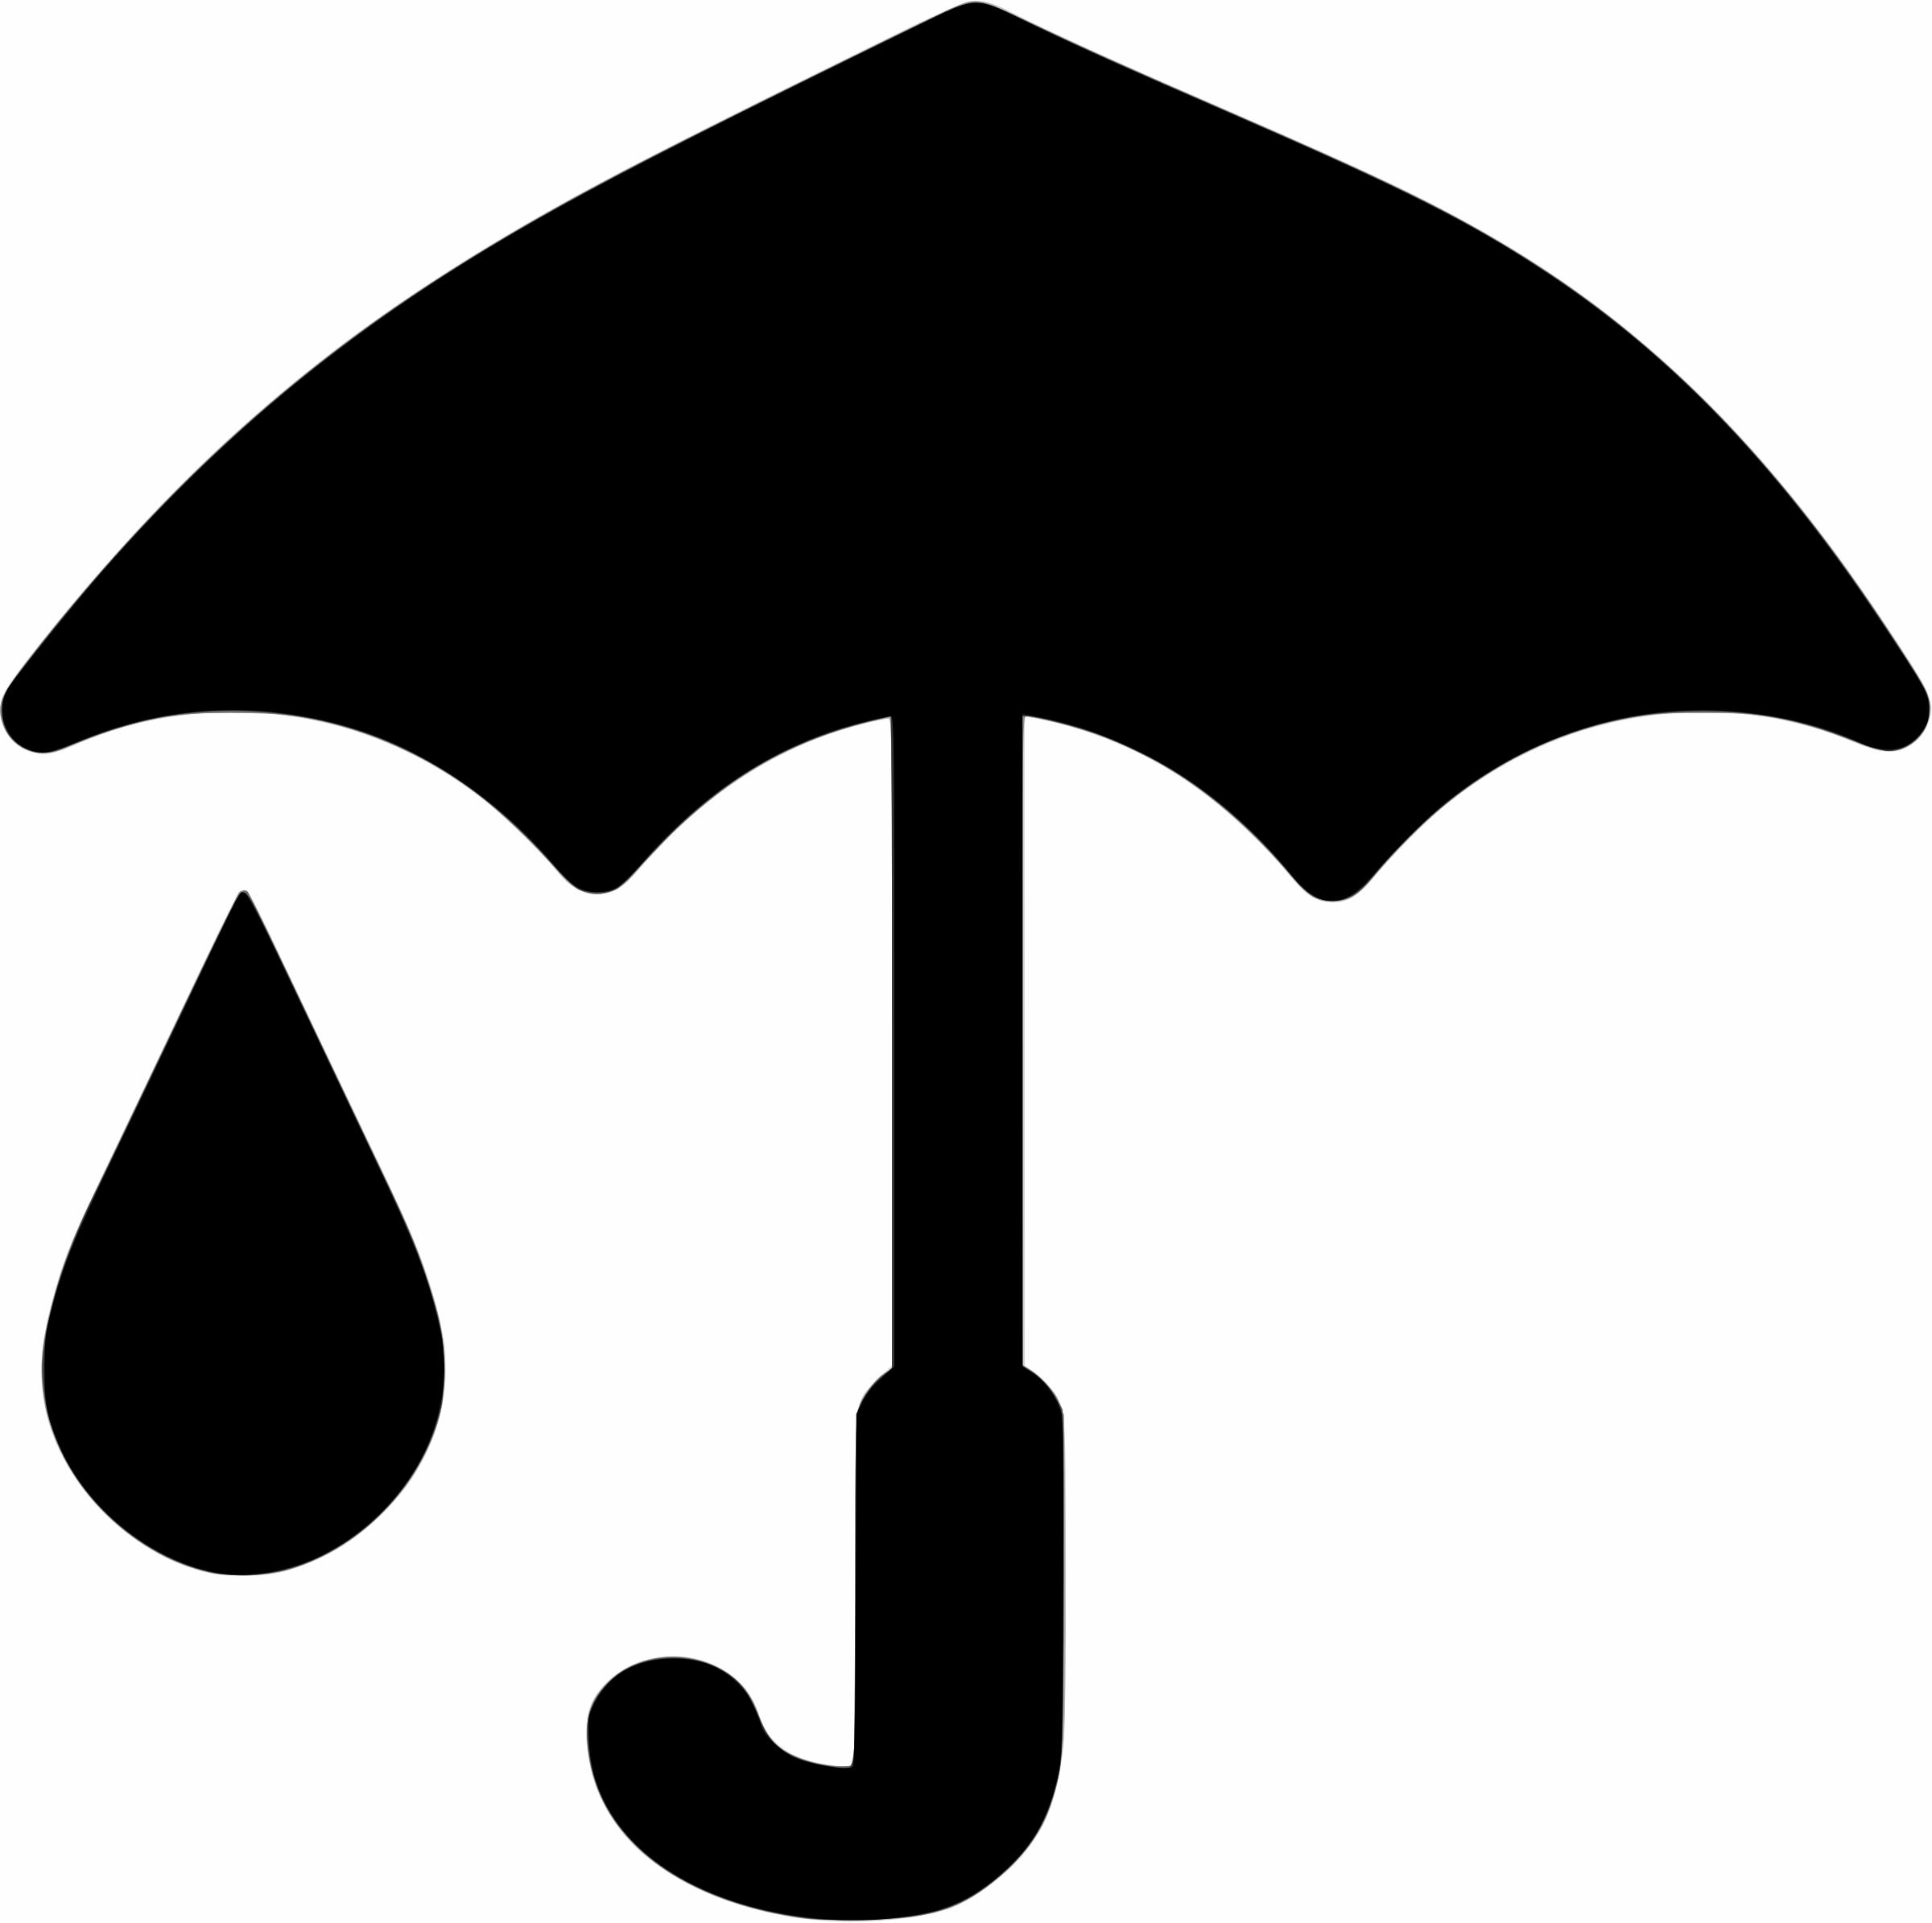 Umbrella and Raindrop icons